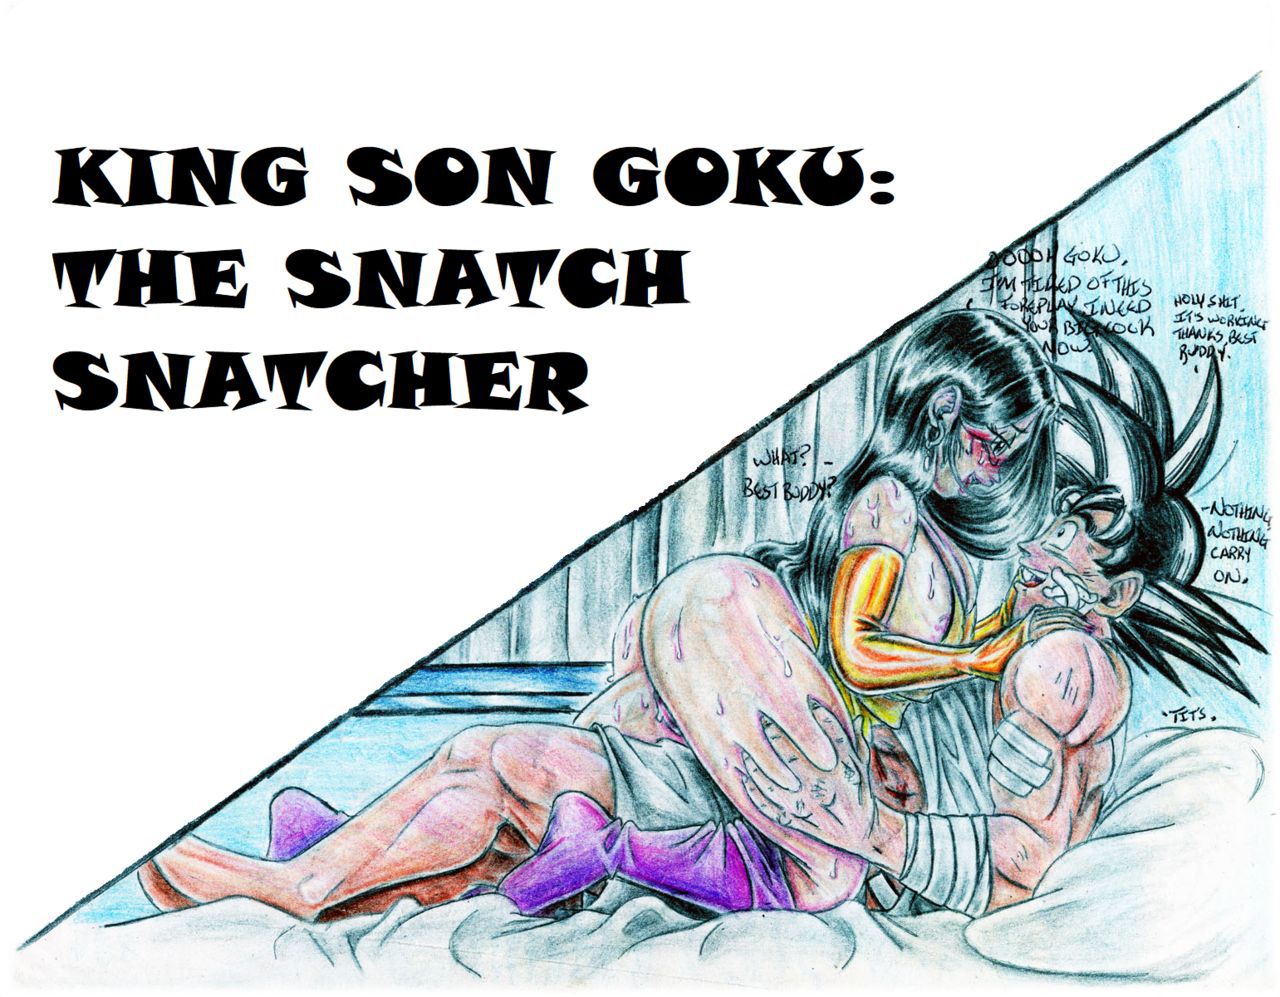 [Skillet91] King Son Goku: The Snatch Snatcher (Dragon Ball Z) [Ongoing] 1